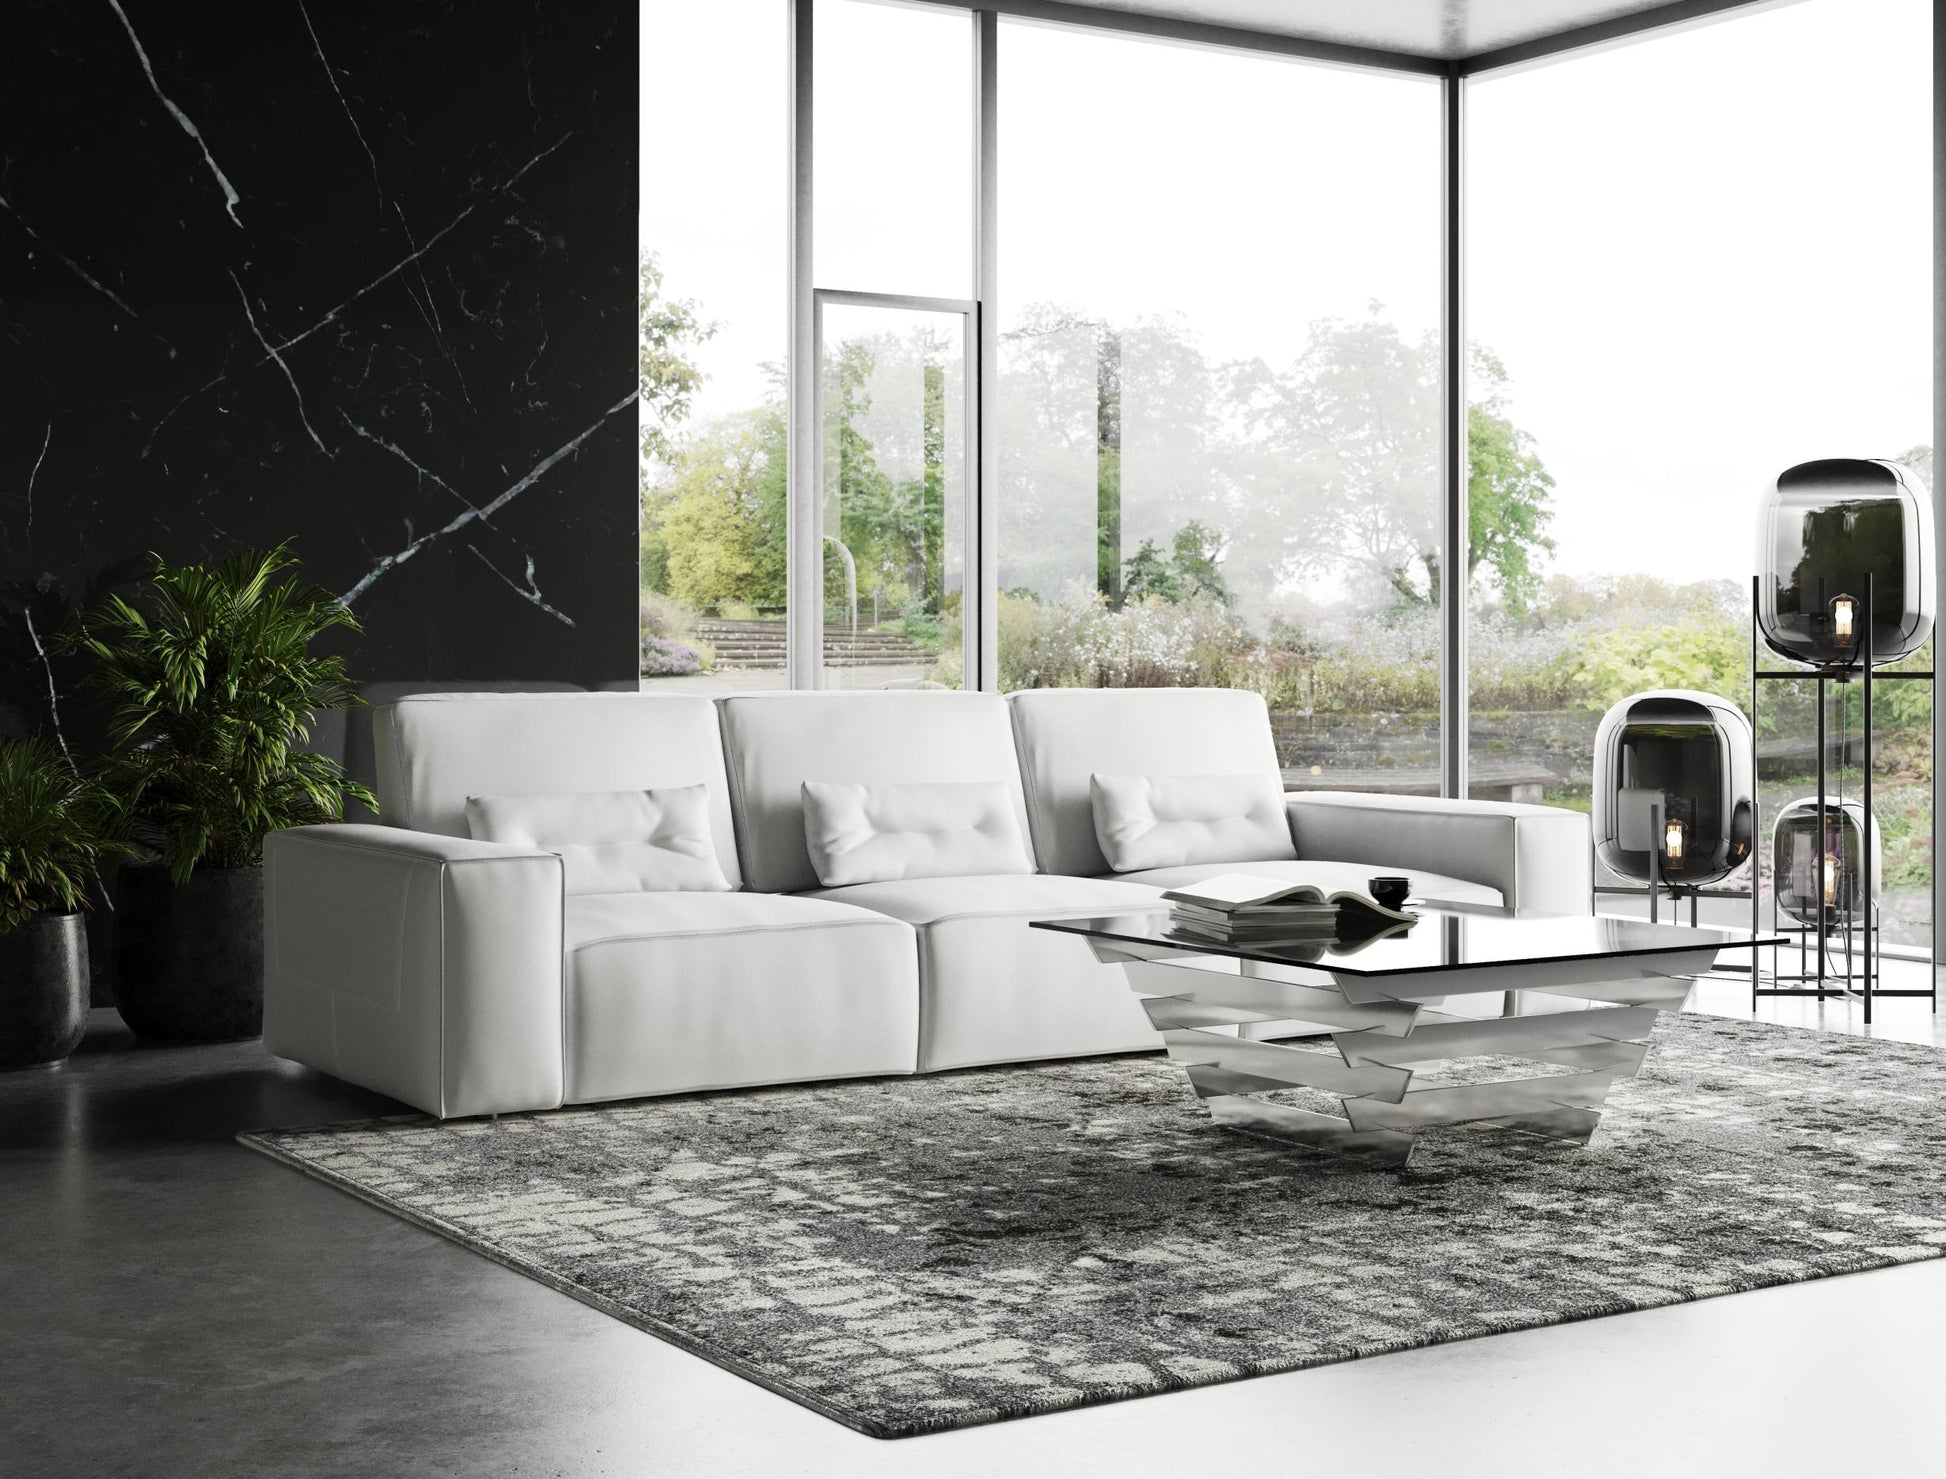 VIG Furniture Coronelli Hollywood Italian White Leather Sectional Sofa